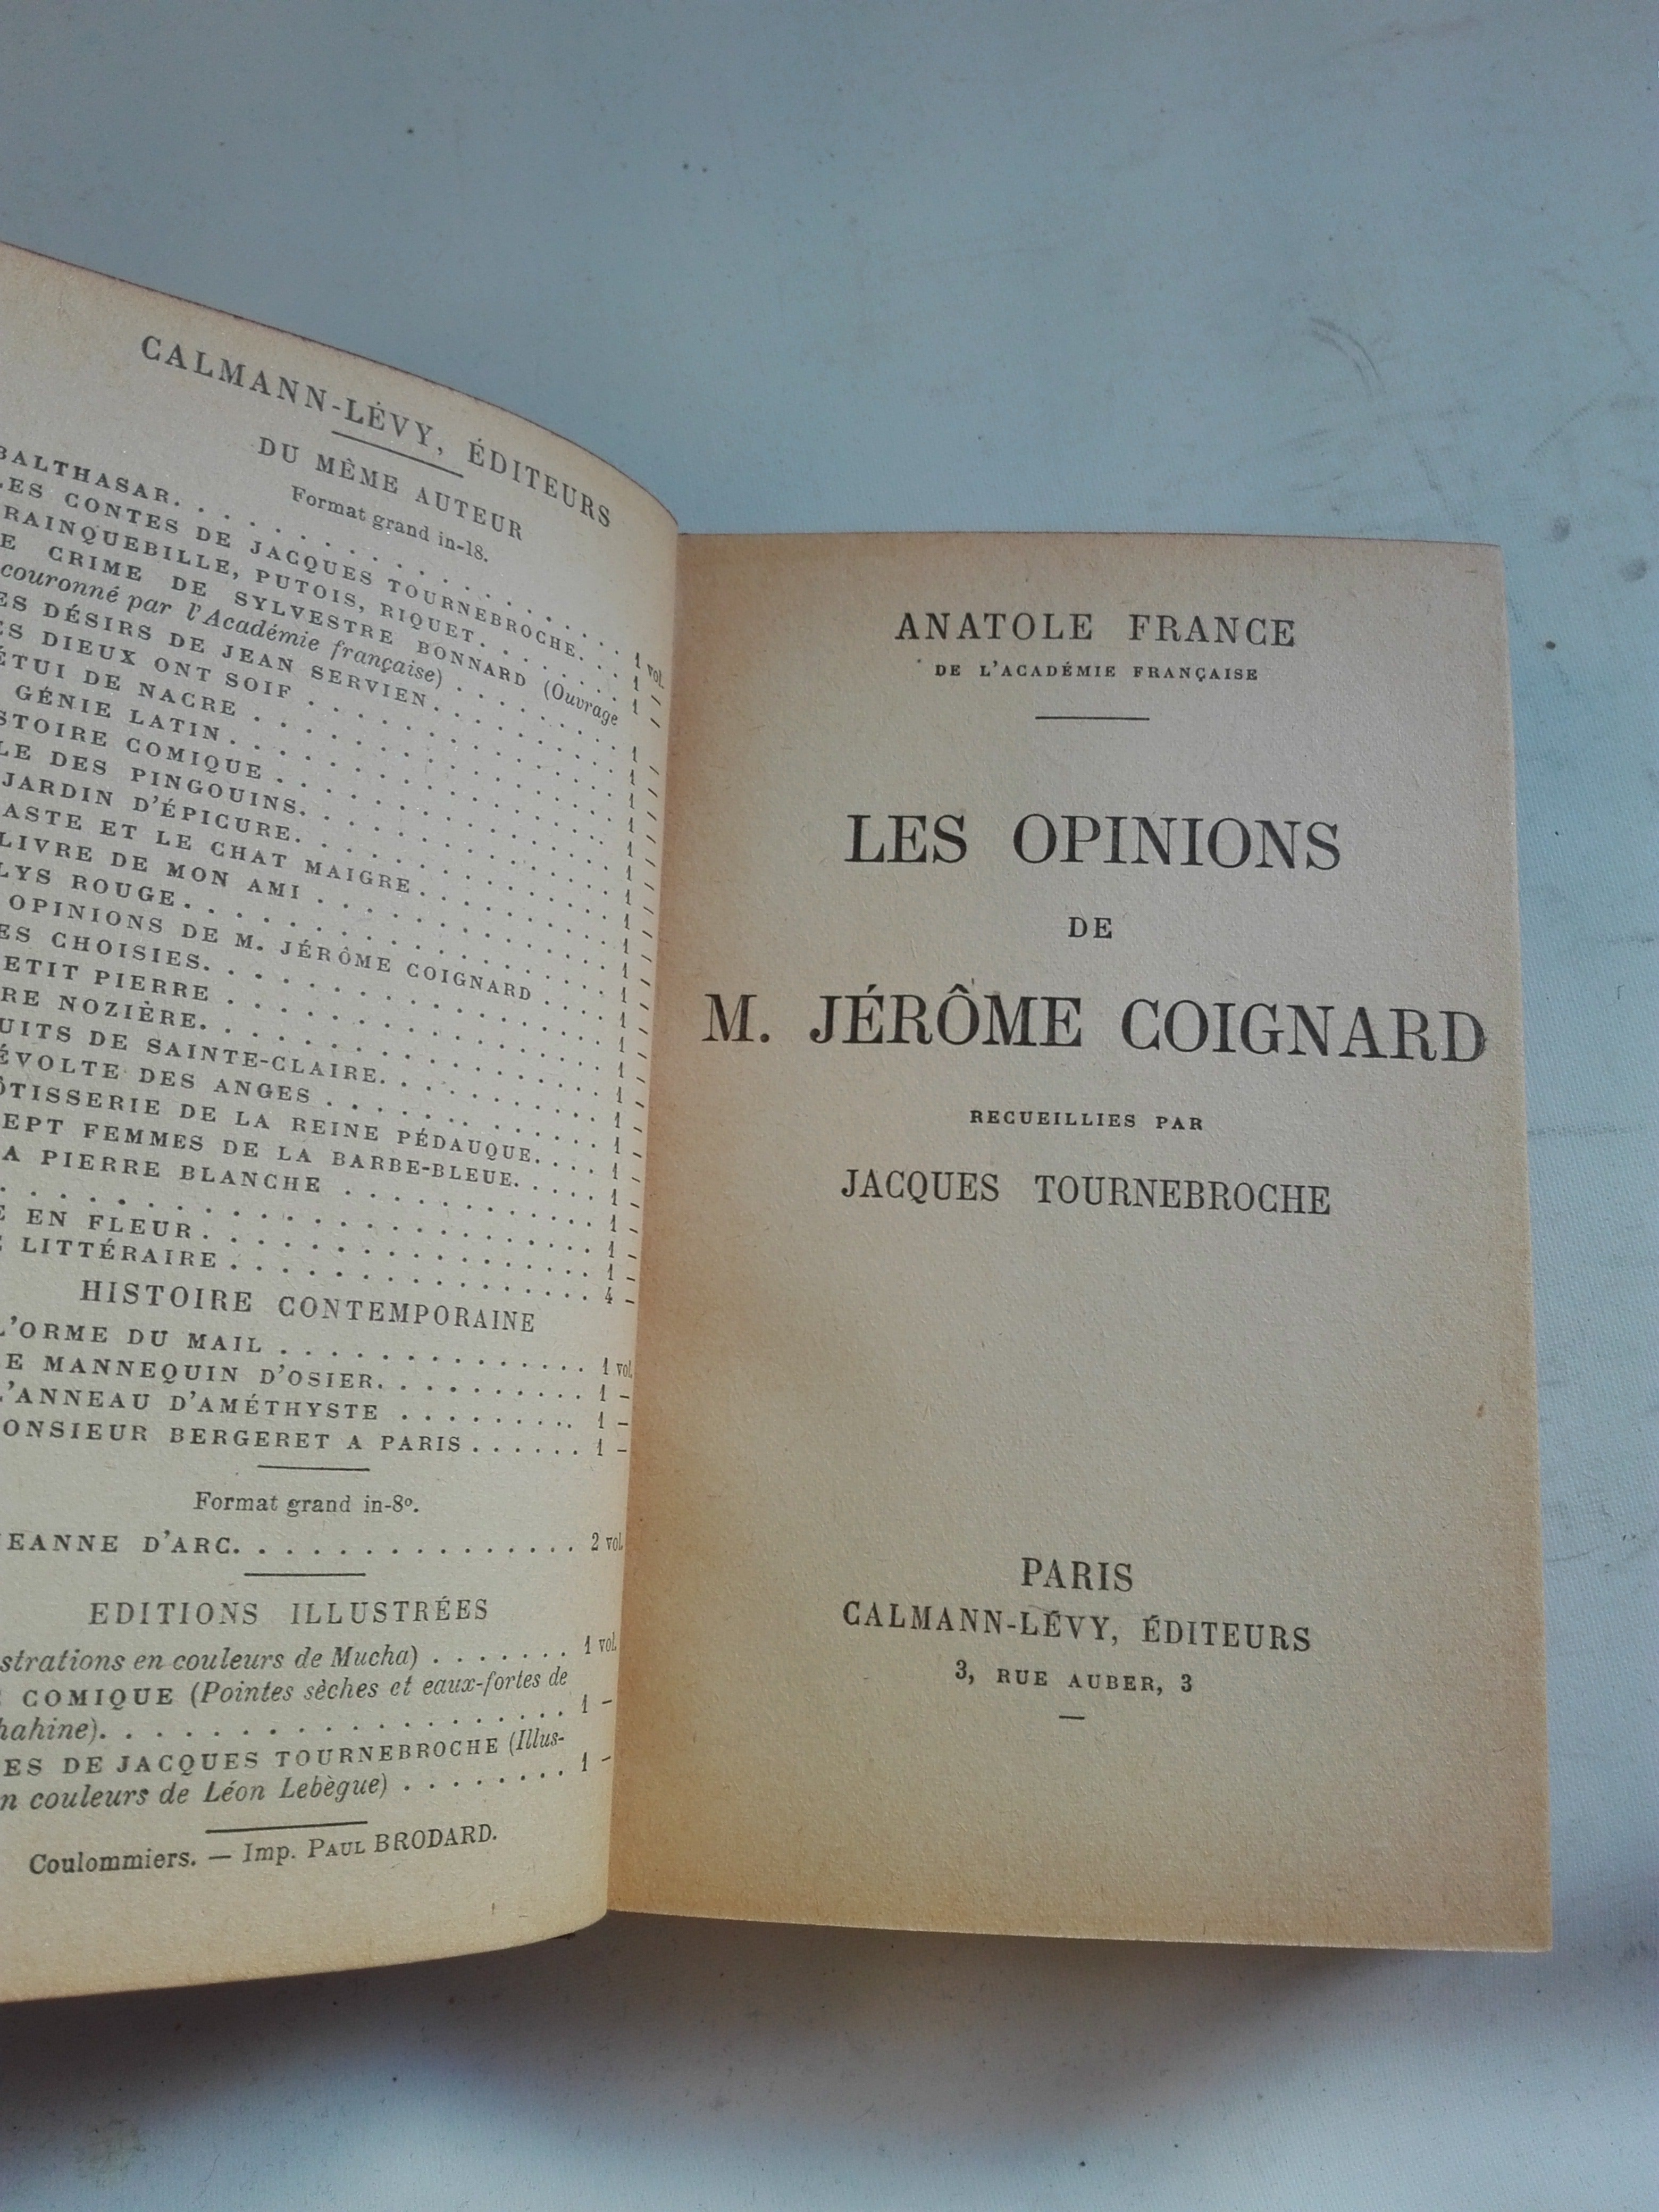 Anatol France - Les Opinions De M. Jerome Coignard